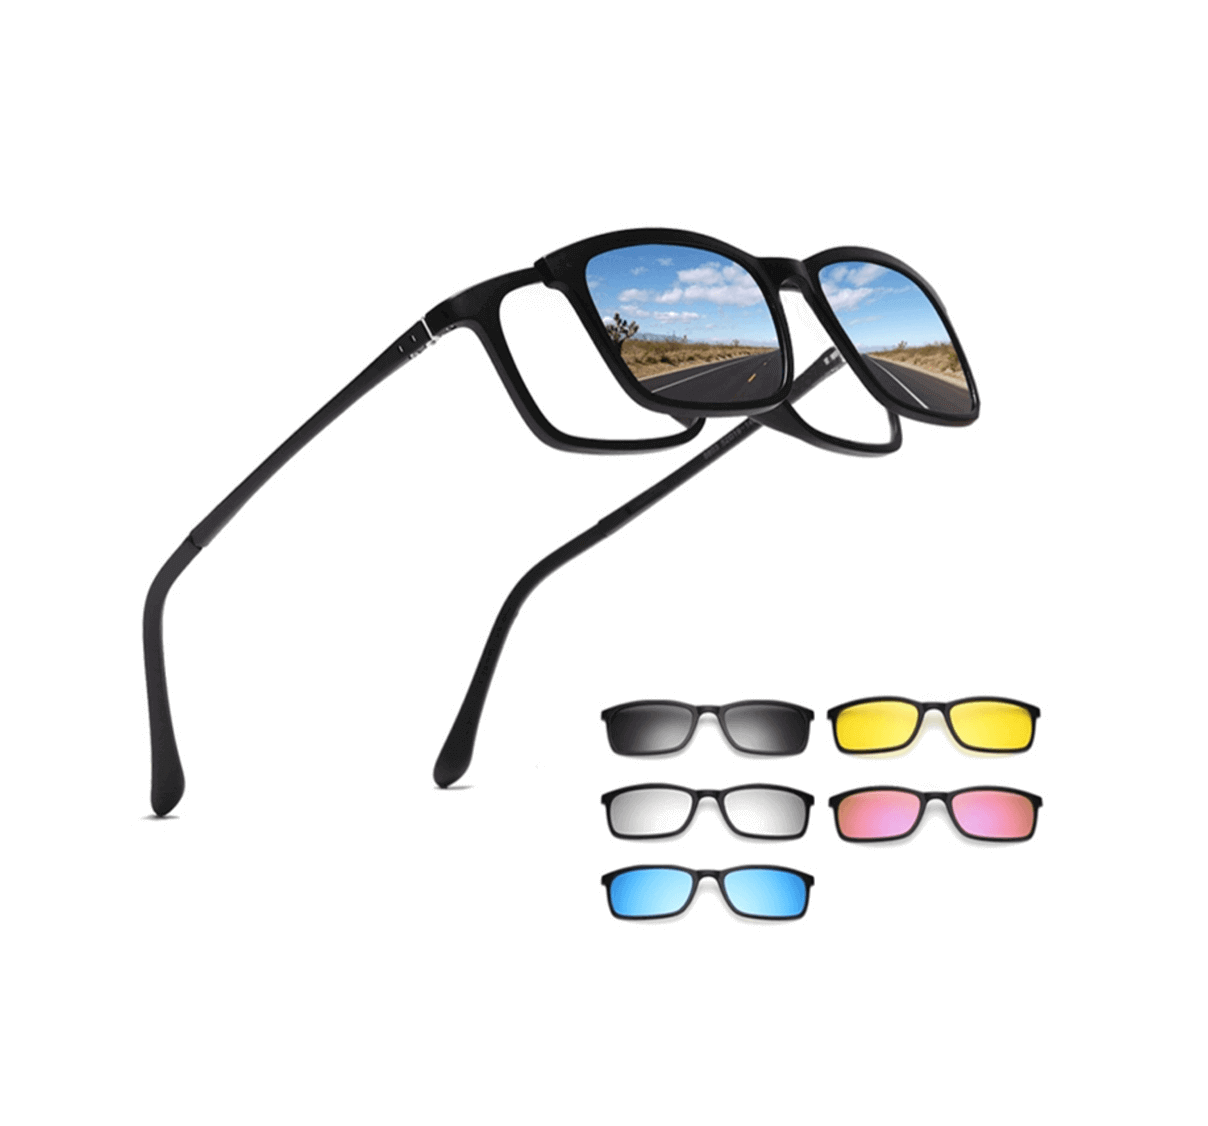 wholesale sunglasses polarized, polarized clip on sunglasses wholesale, clip on sunglasses wholesale, bulk polarized sunglasses, polarized sunglasses suppliers